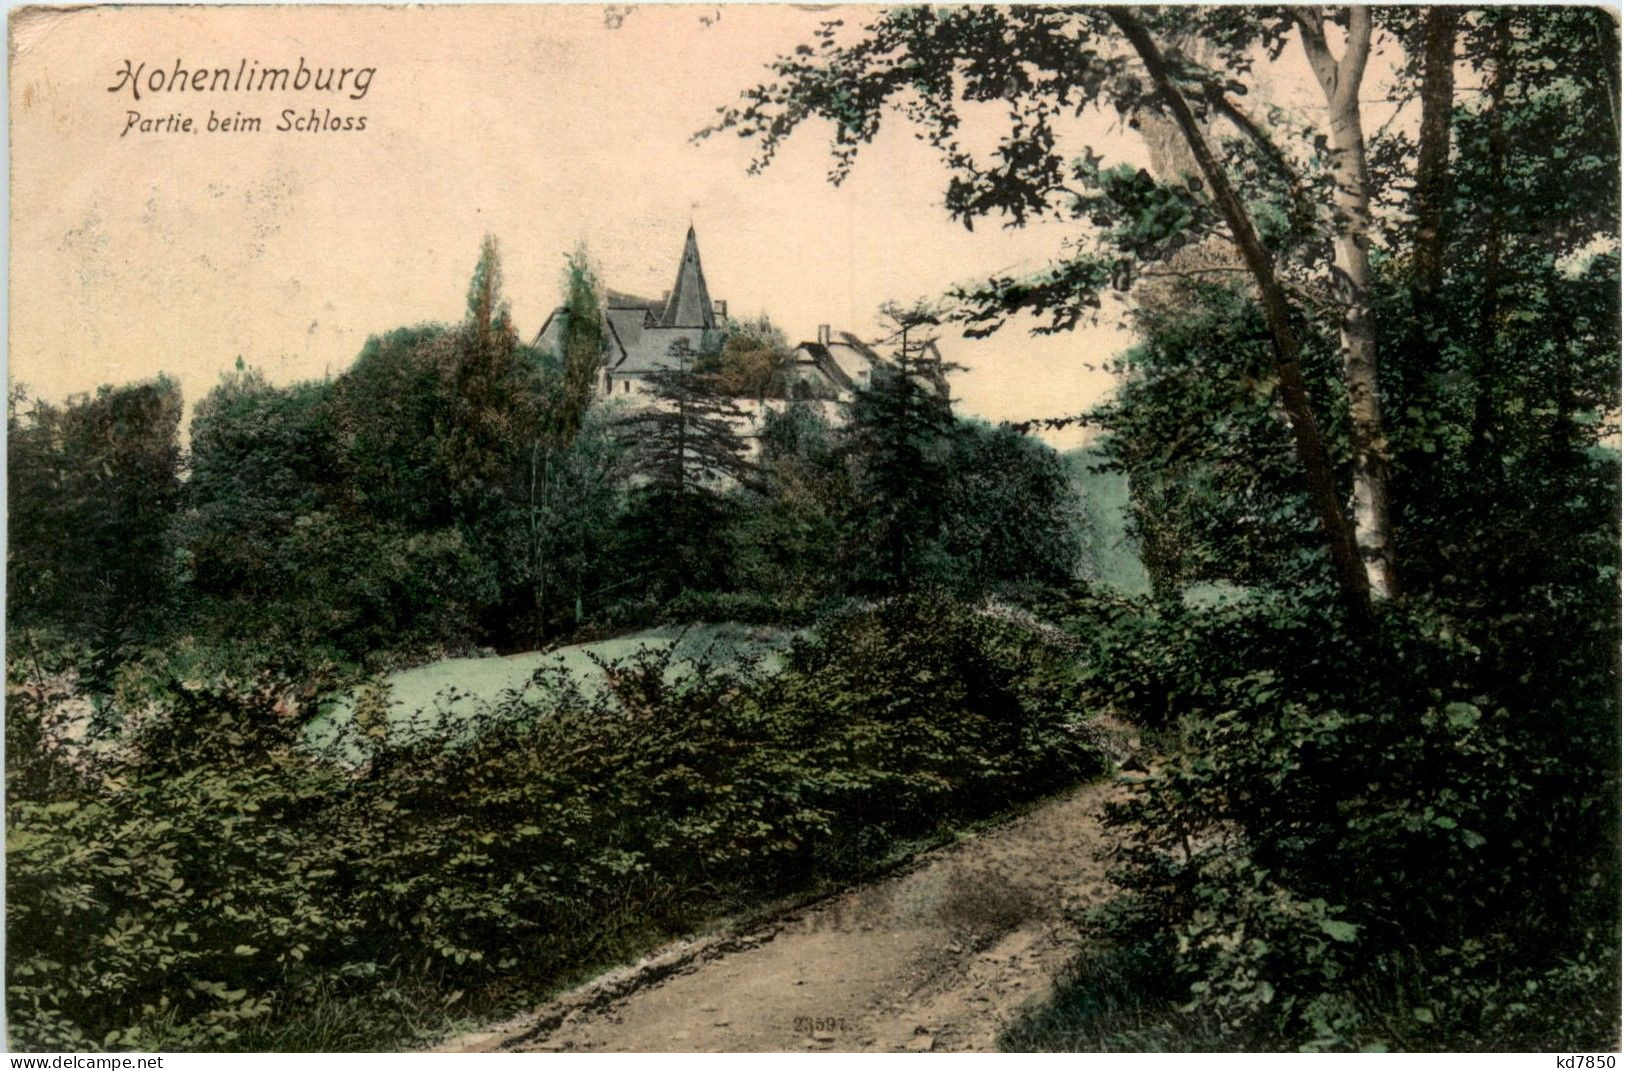 Hohenlimburg - Hagen